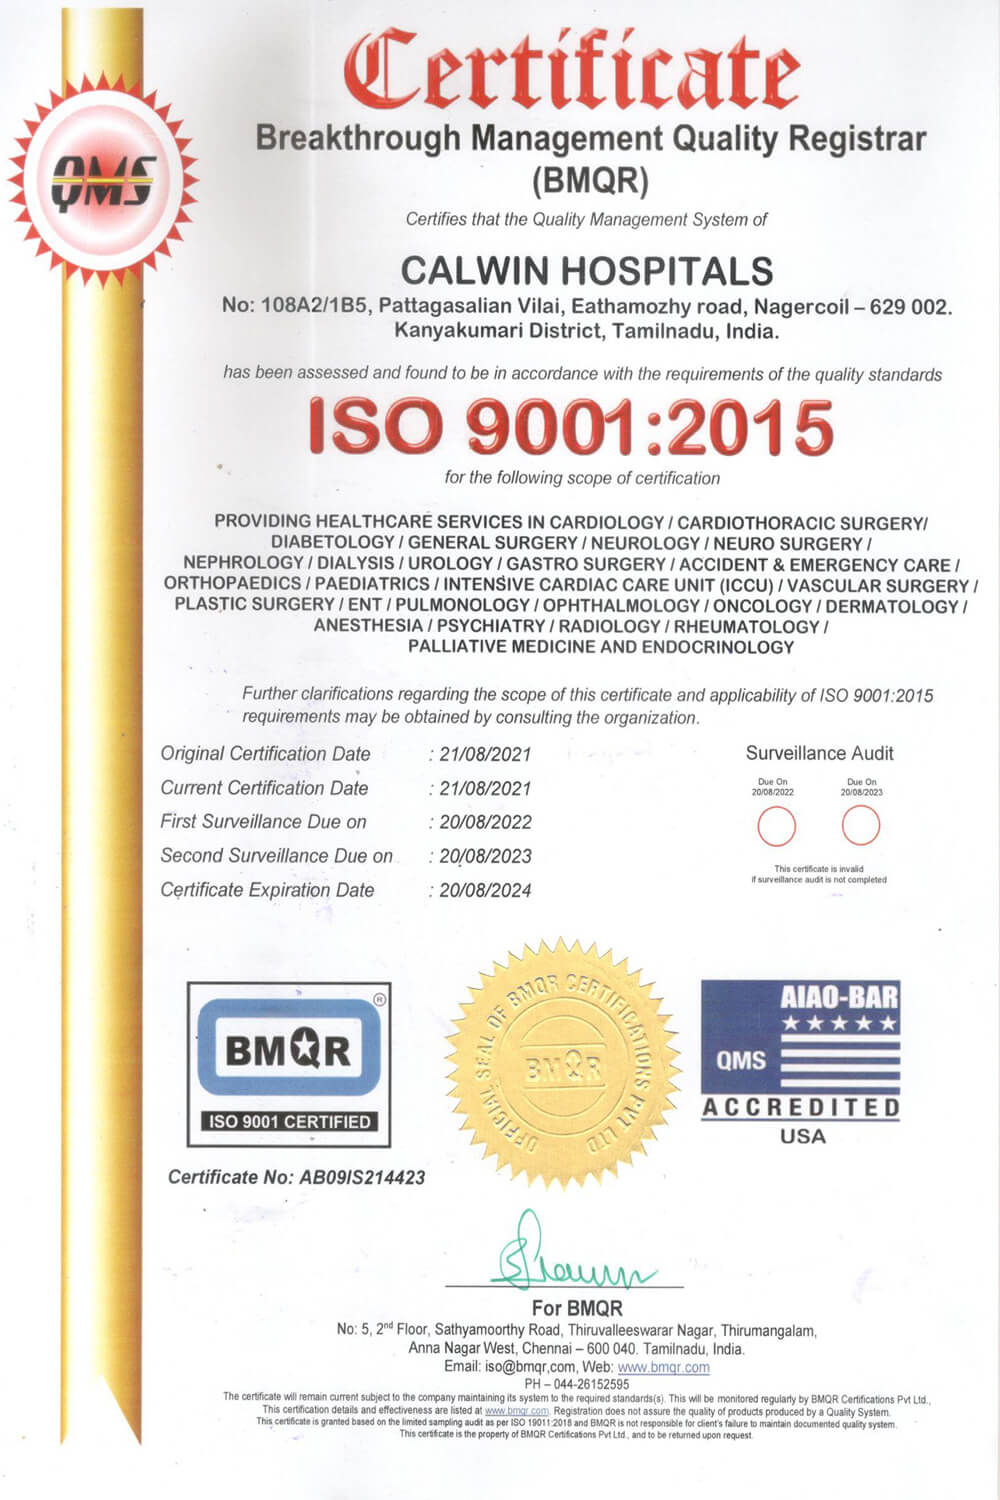 Calwin Hospital BMQR Certificate